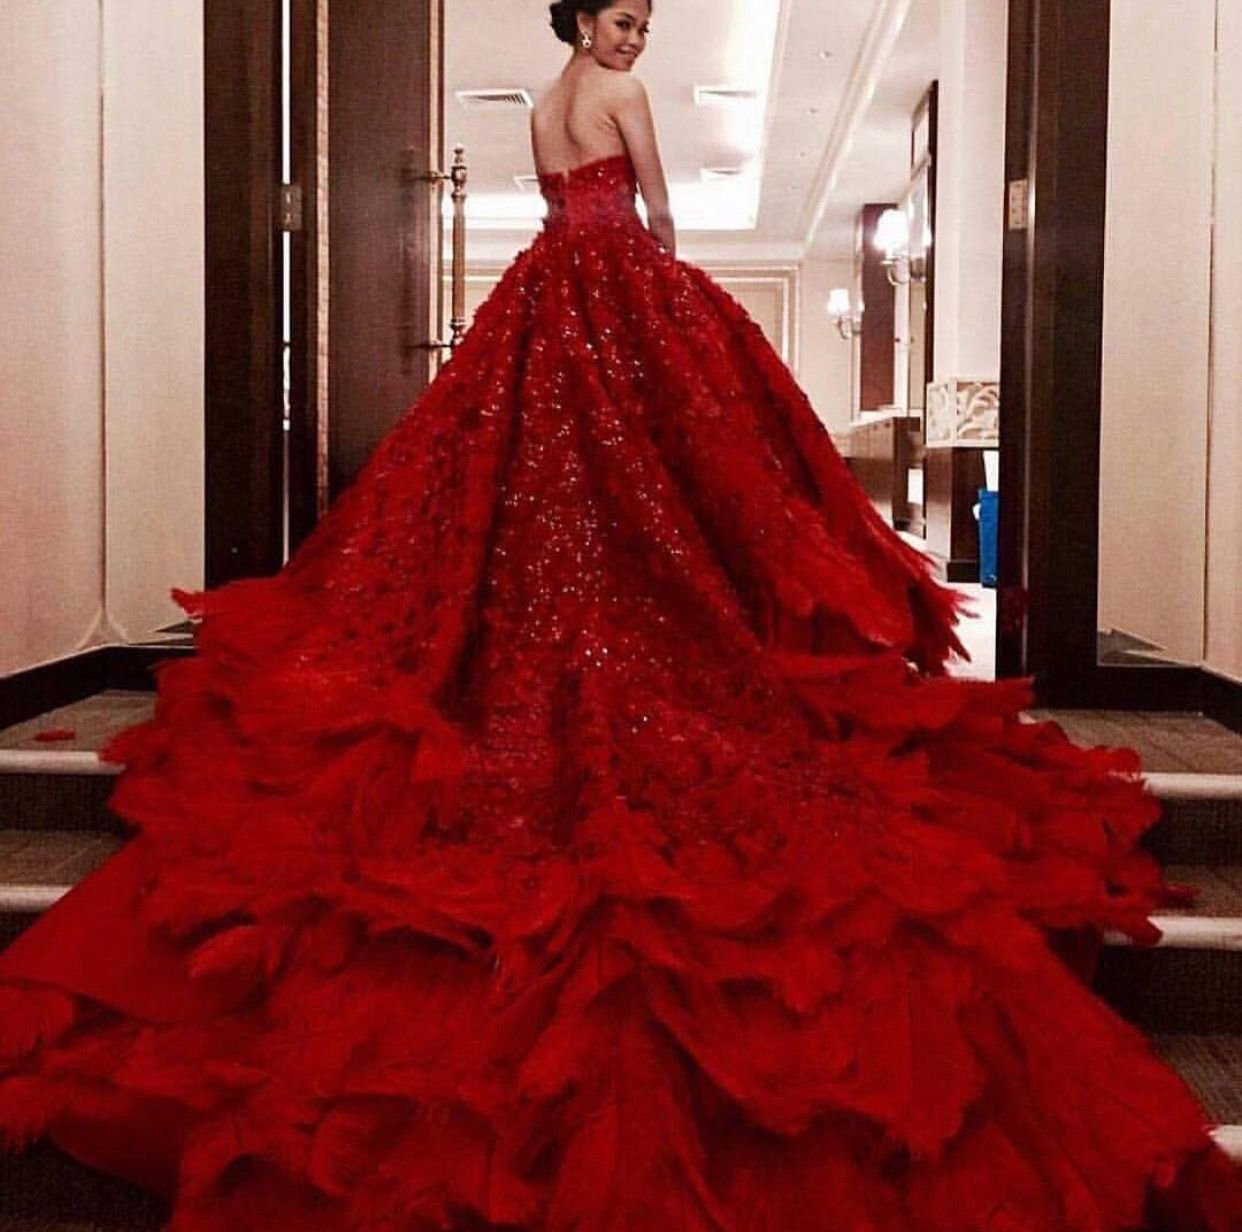 She likes red. Красное свадебное платье. Красное пышное платье. Свадебные платья красного цвета. Роскошное красное платье.